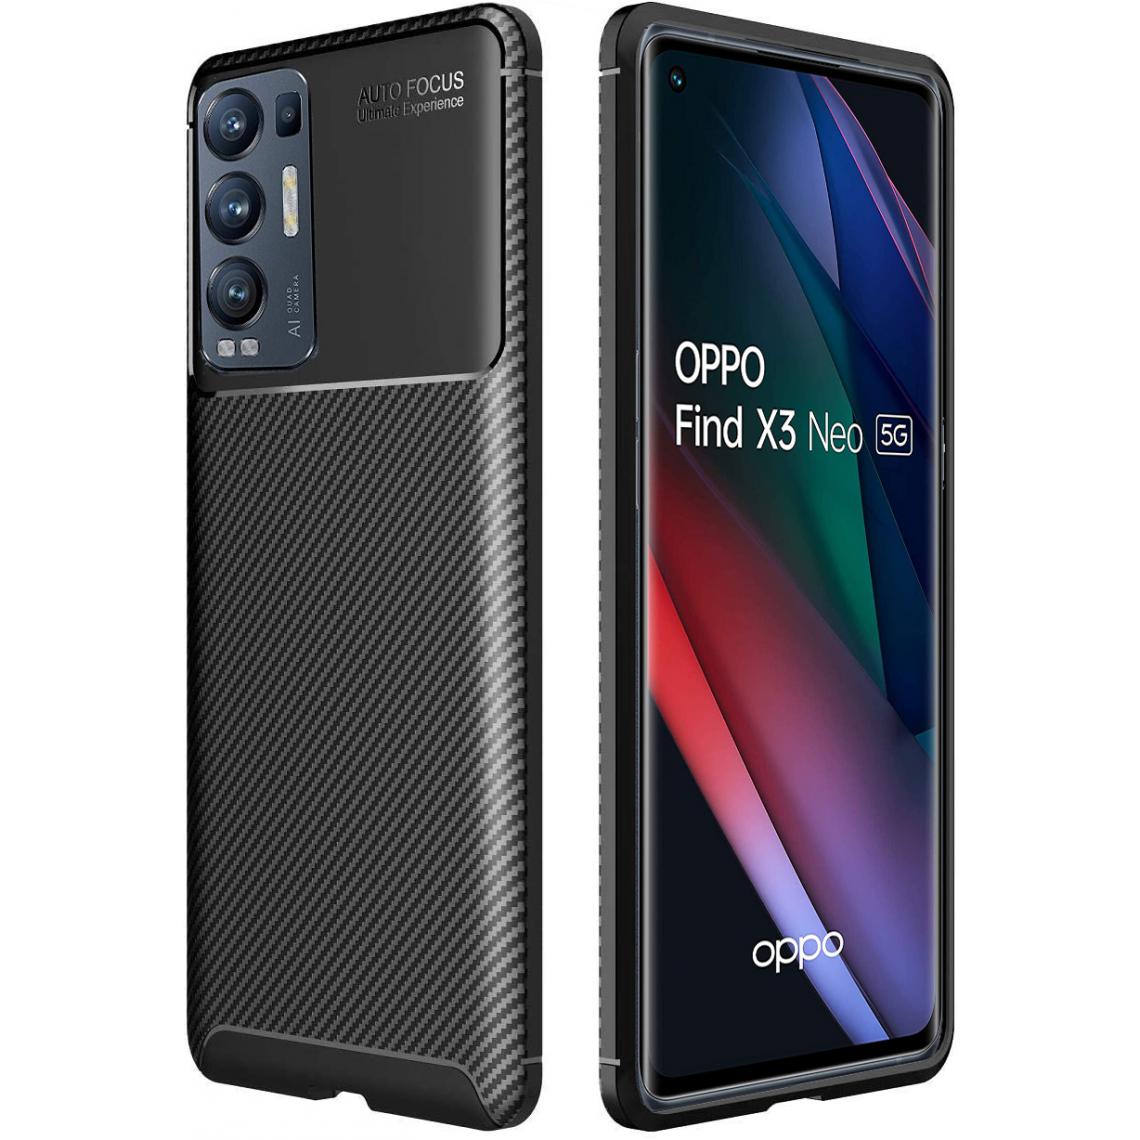 Xeptio - Coque brossée noire Oppo Find X3 NEO 5G Carbon Fiber Antichoc protection - Oppo Find X3 NEO 5G - Coque, étui smartphone